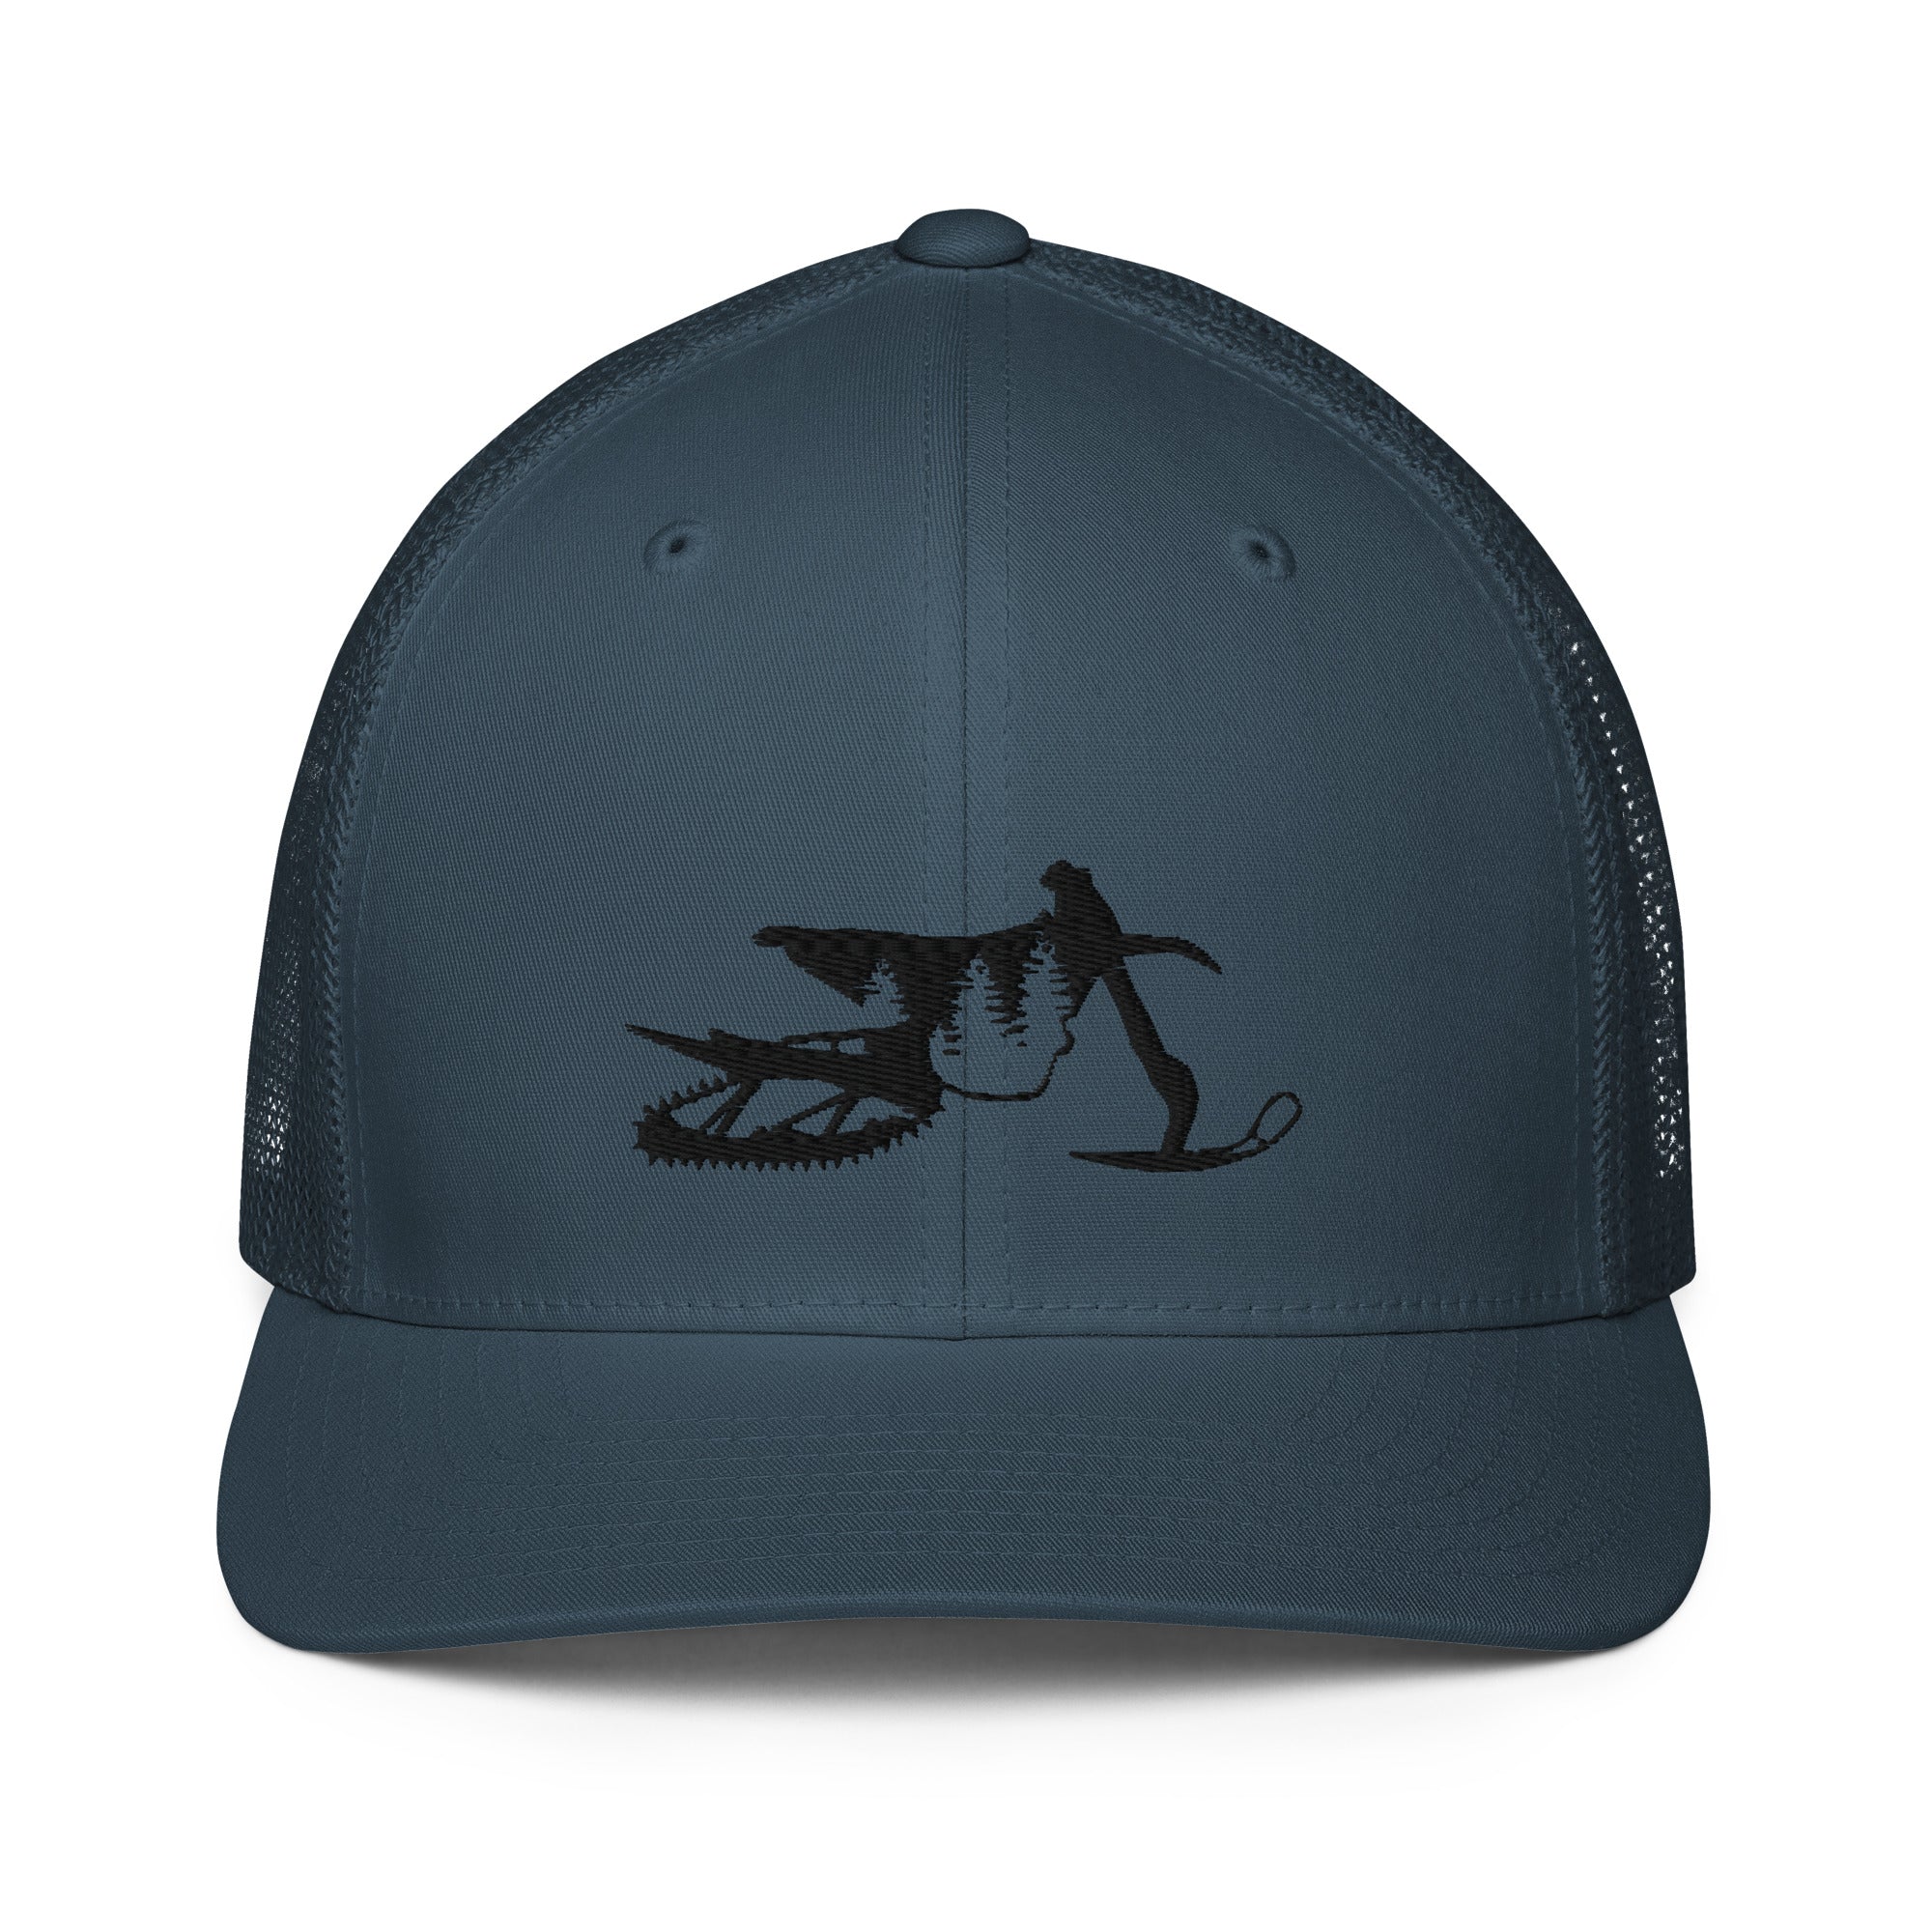 SnowBike Hat, Trucker, Fitted, Black